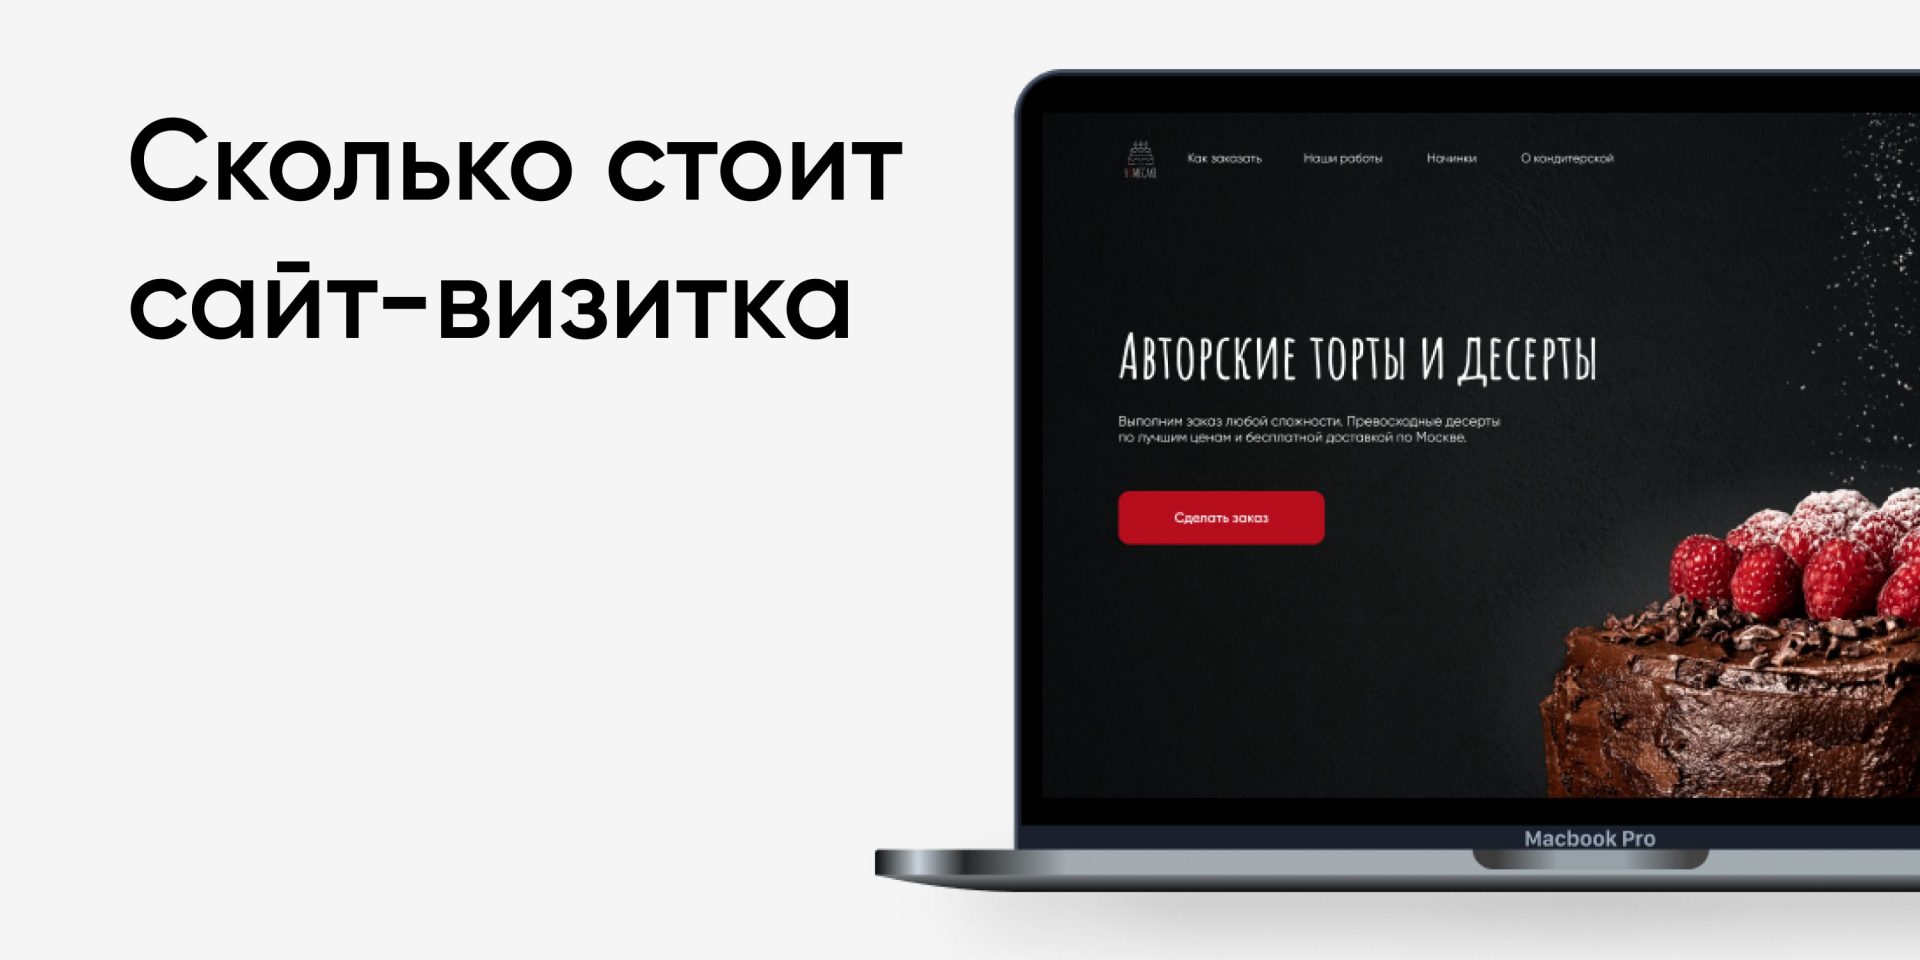 Таргетированная реклама ВКонтакте 23